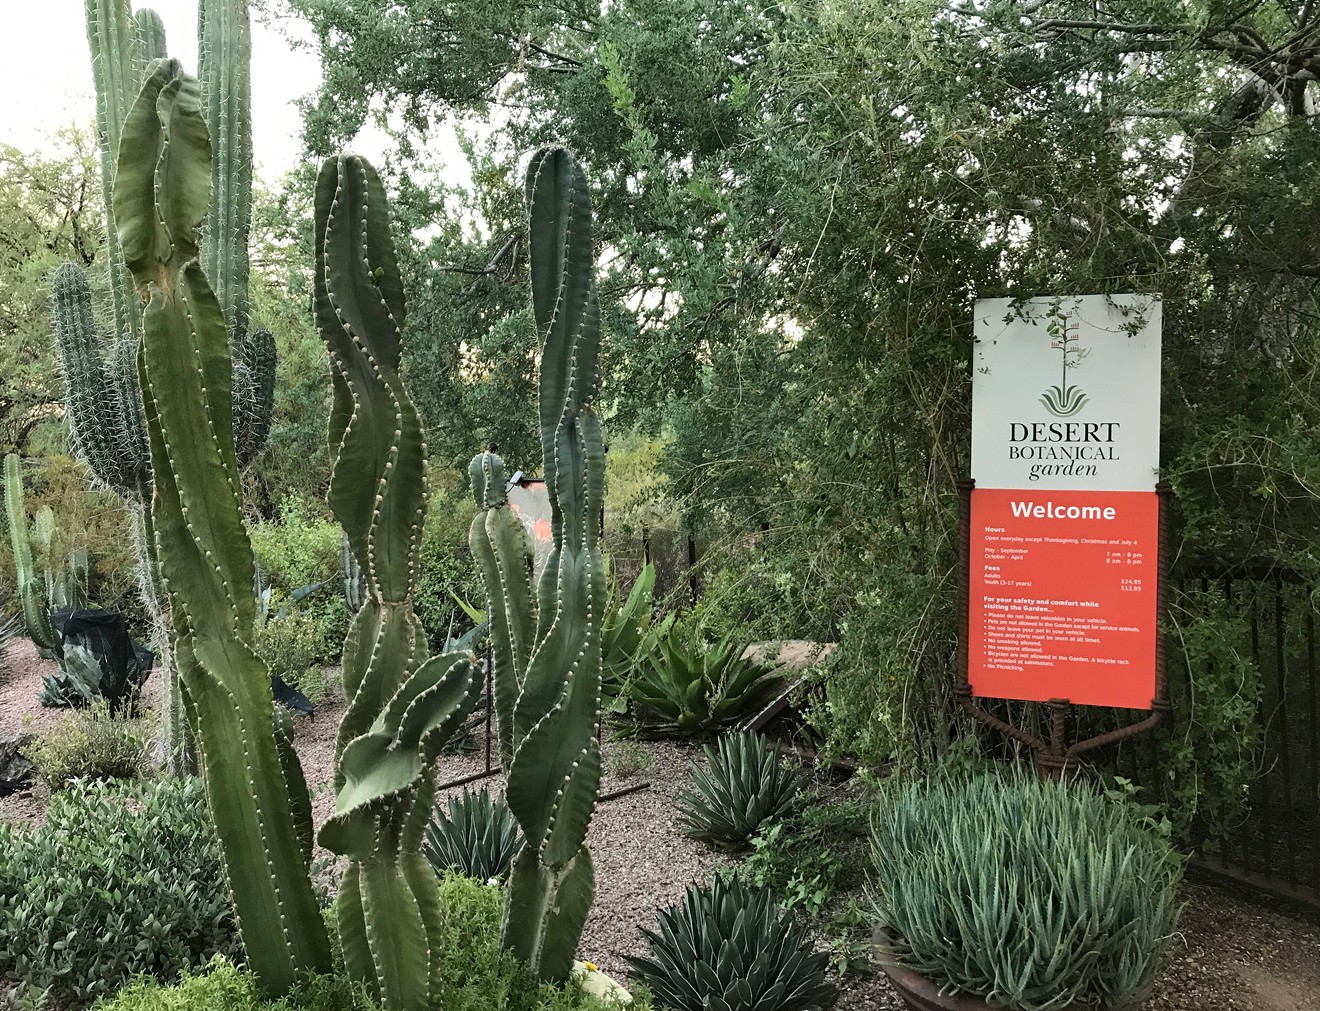 Desert Botanical Garden will open a new "Electric Light" exhibition in October 2018.